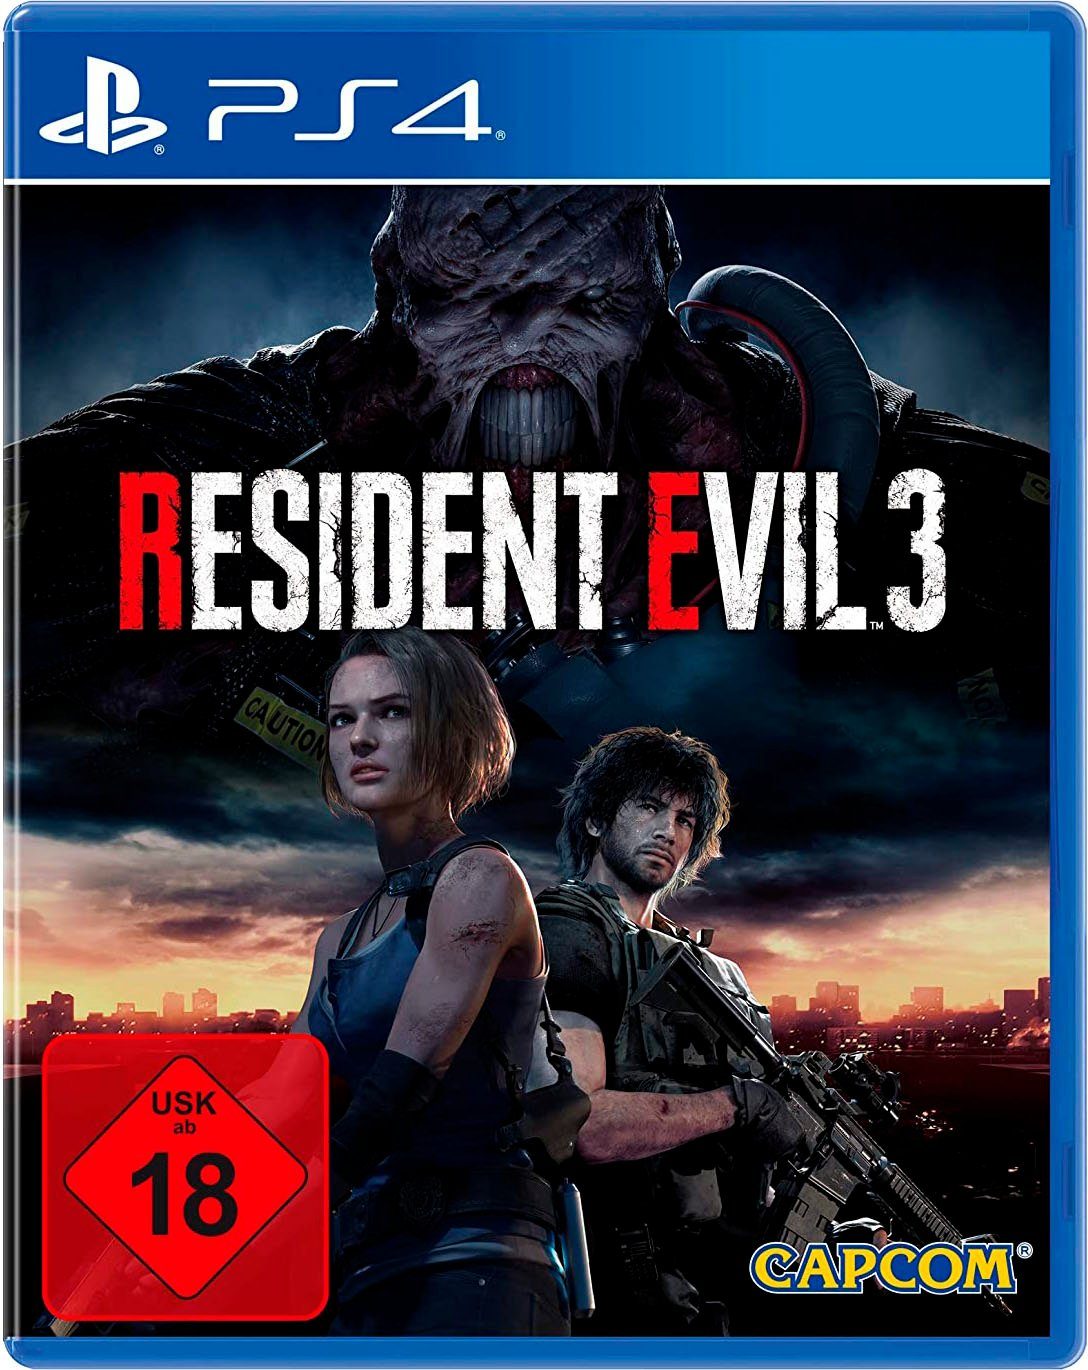 PS4 4 3 PlayStation Capcom Resident Evil